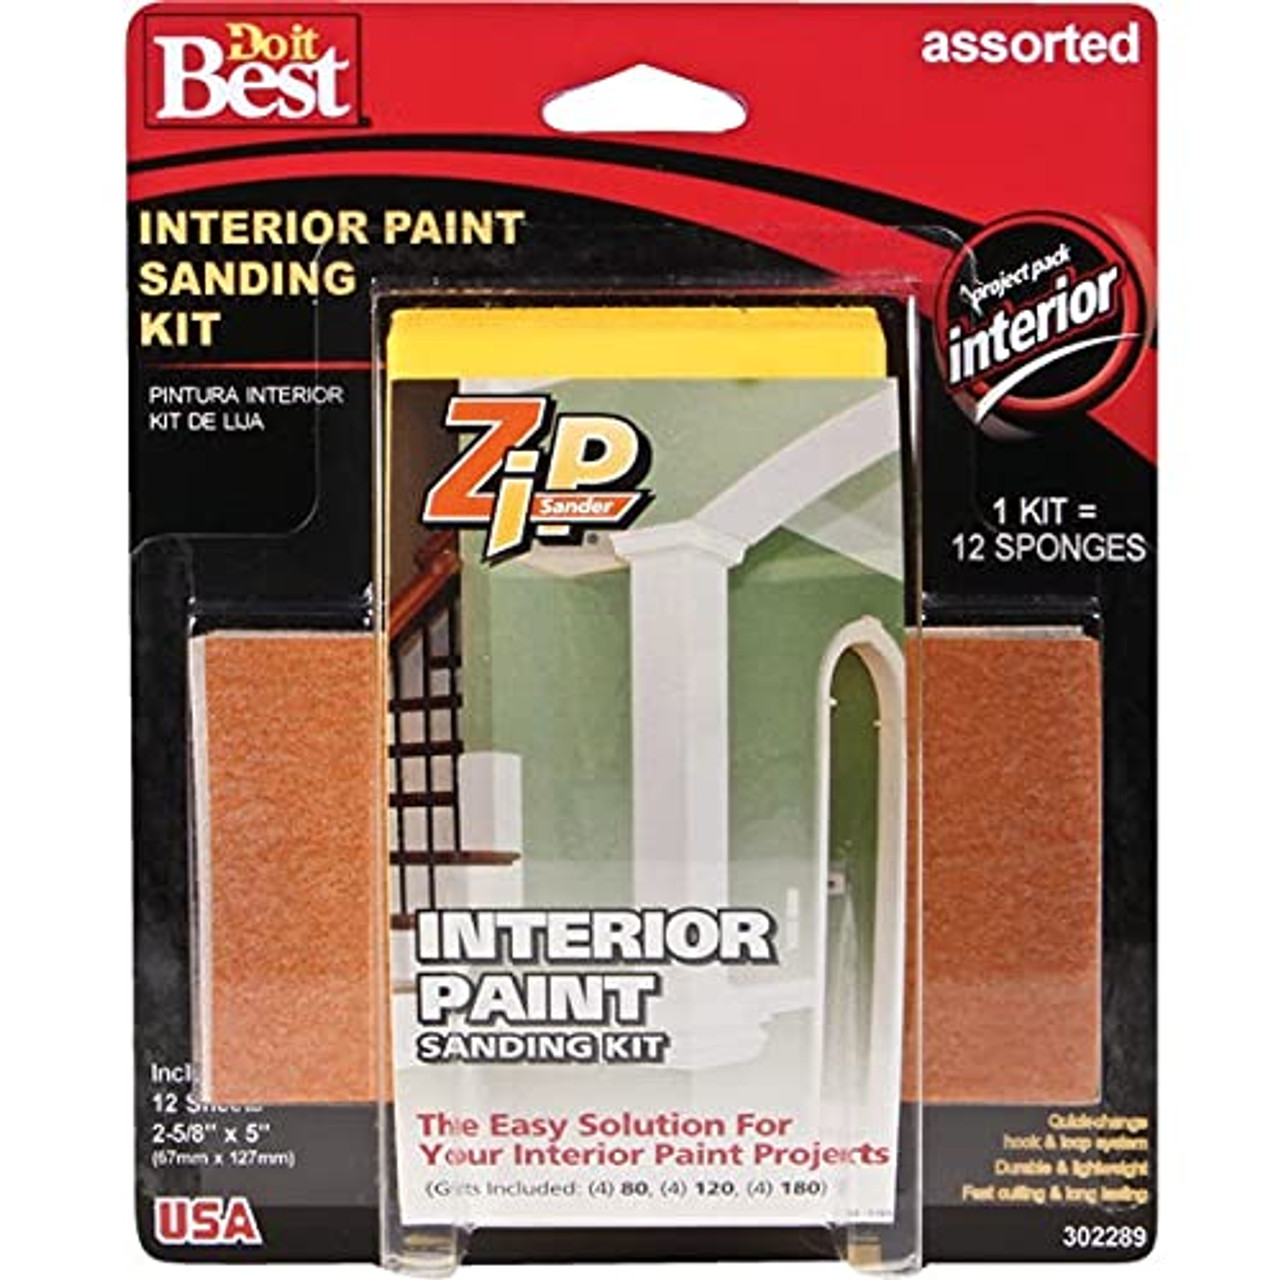 Do it Best - 302289 Interior Paint Kit